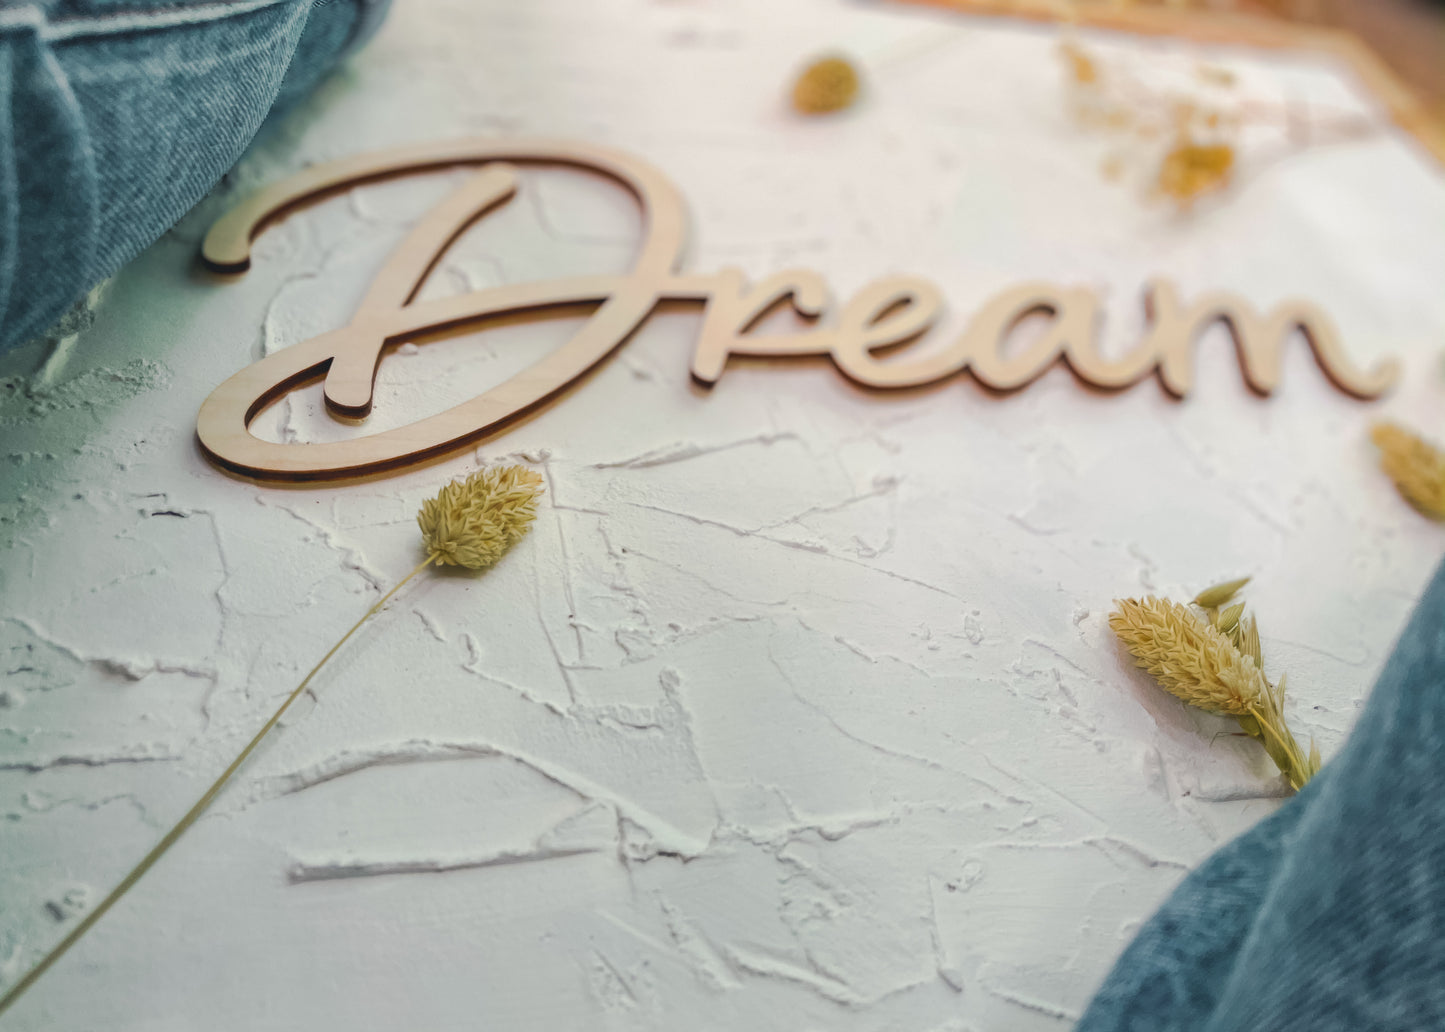 'Dream' - Wood Words